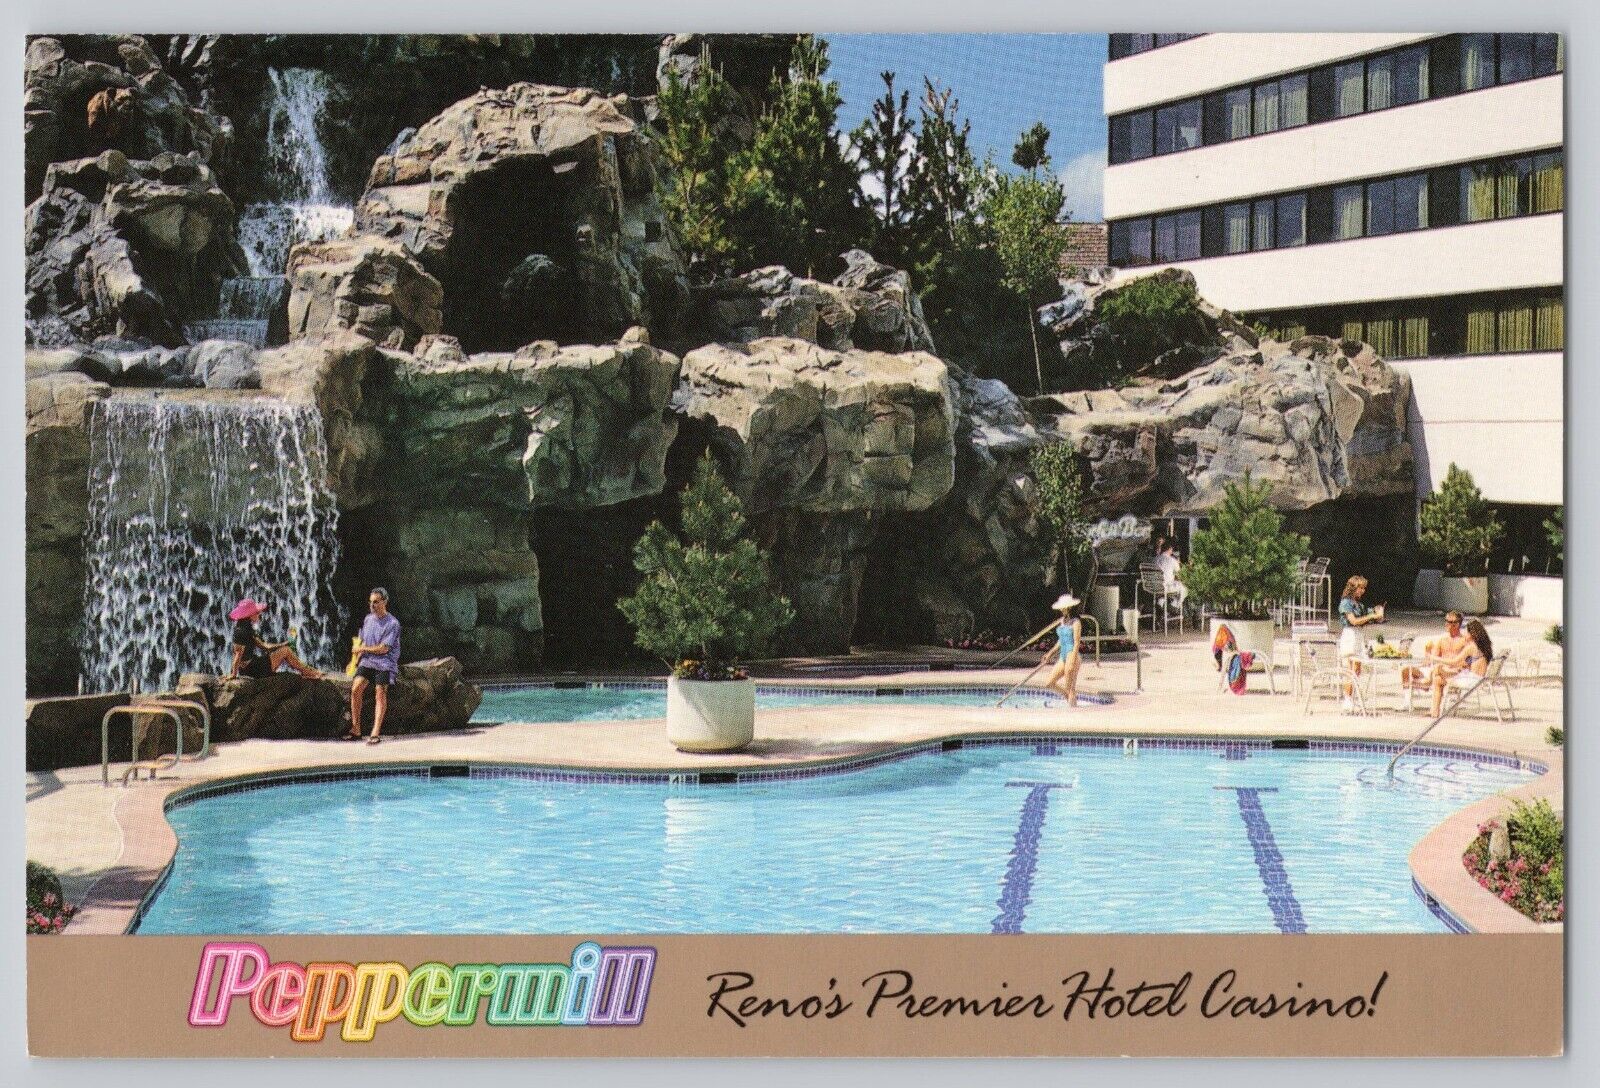 Peppermill Waterfall Pool Casino Resort Hotel Reno Nevada